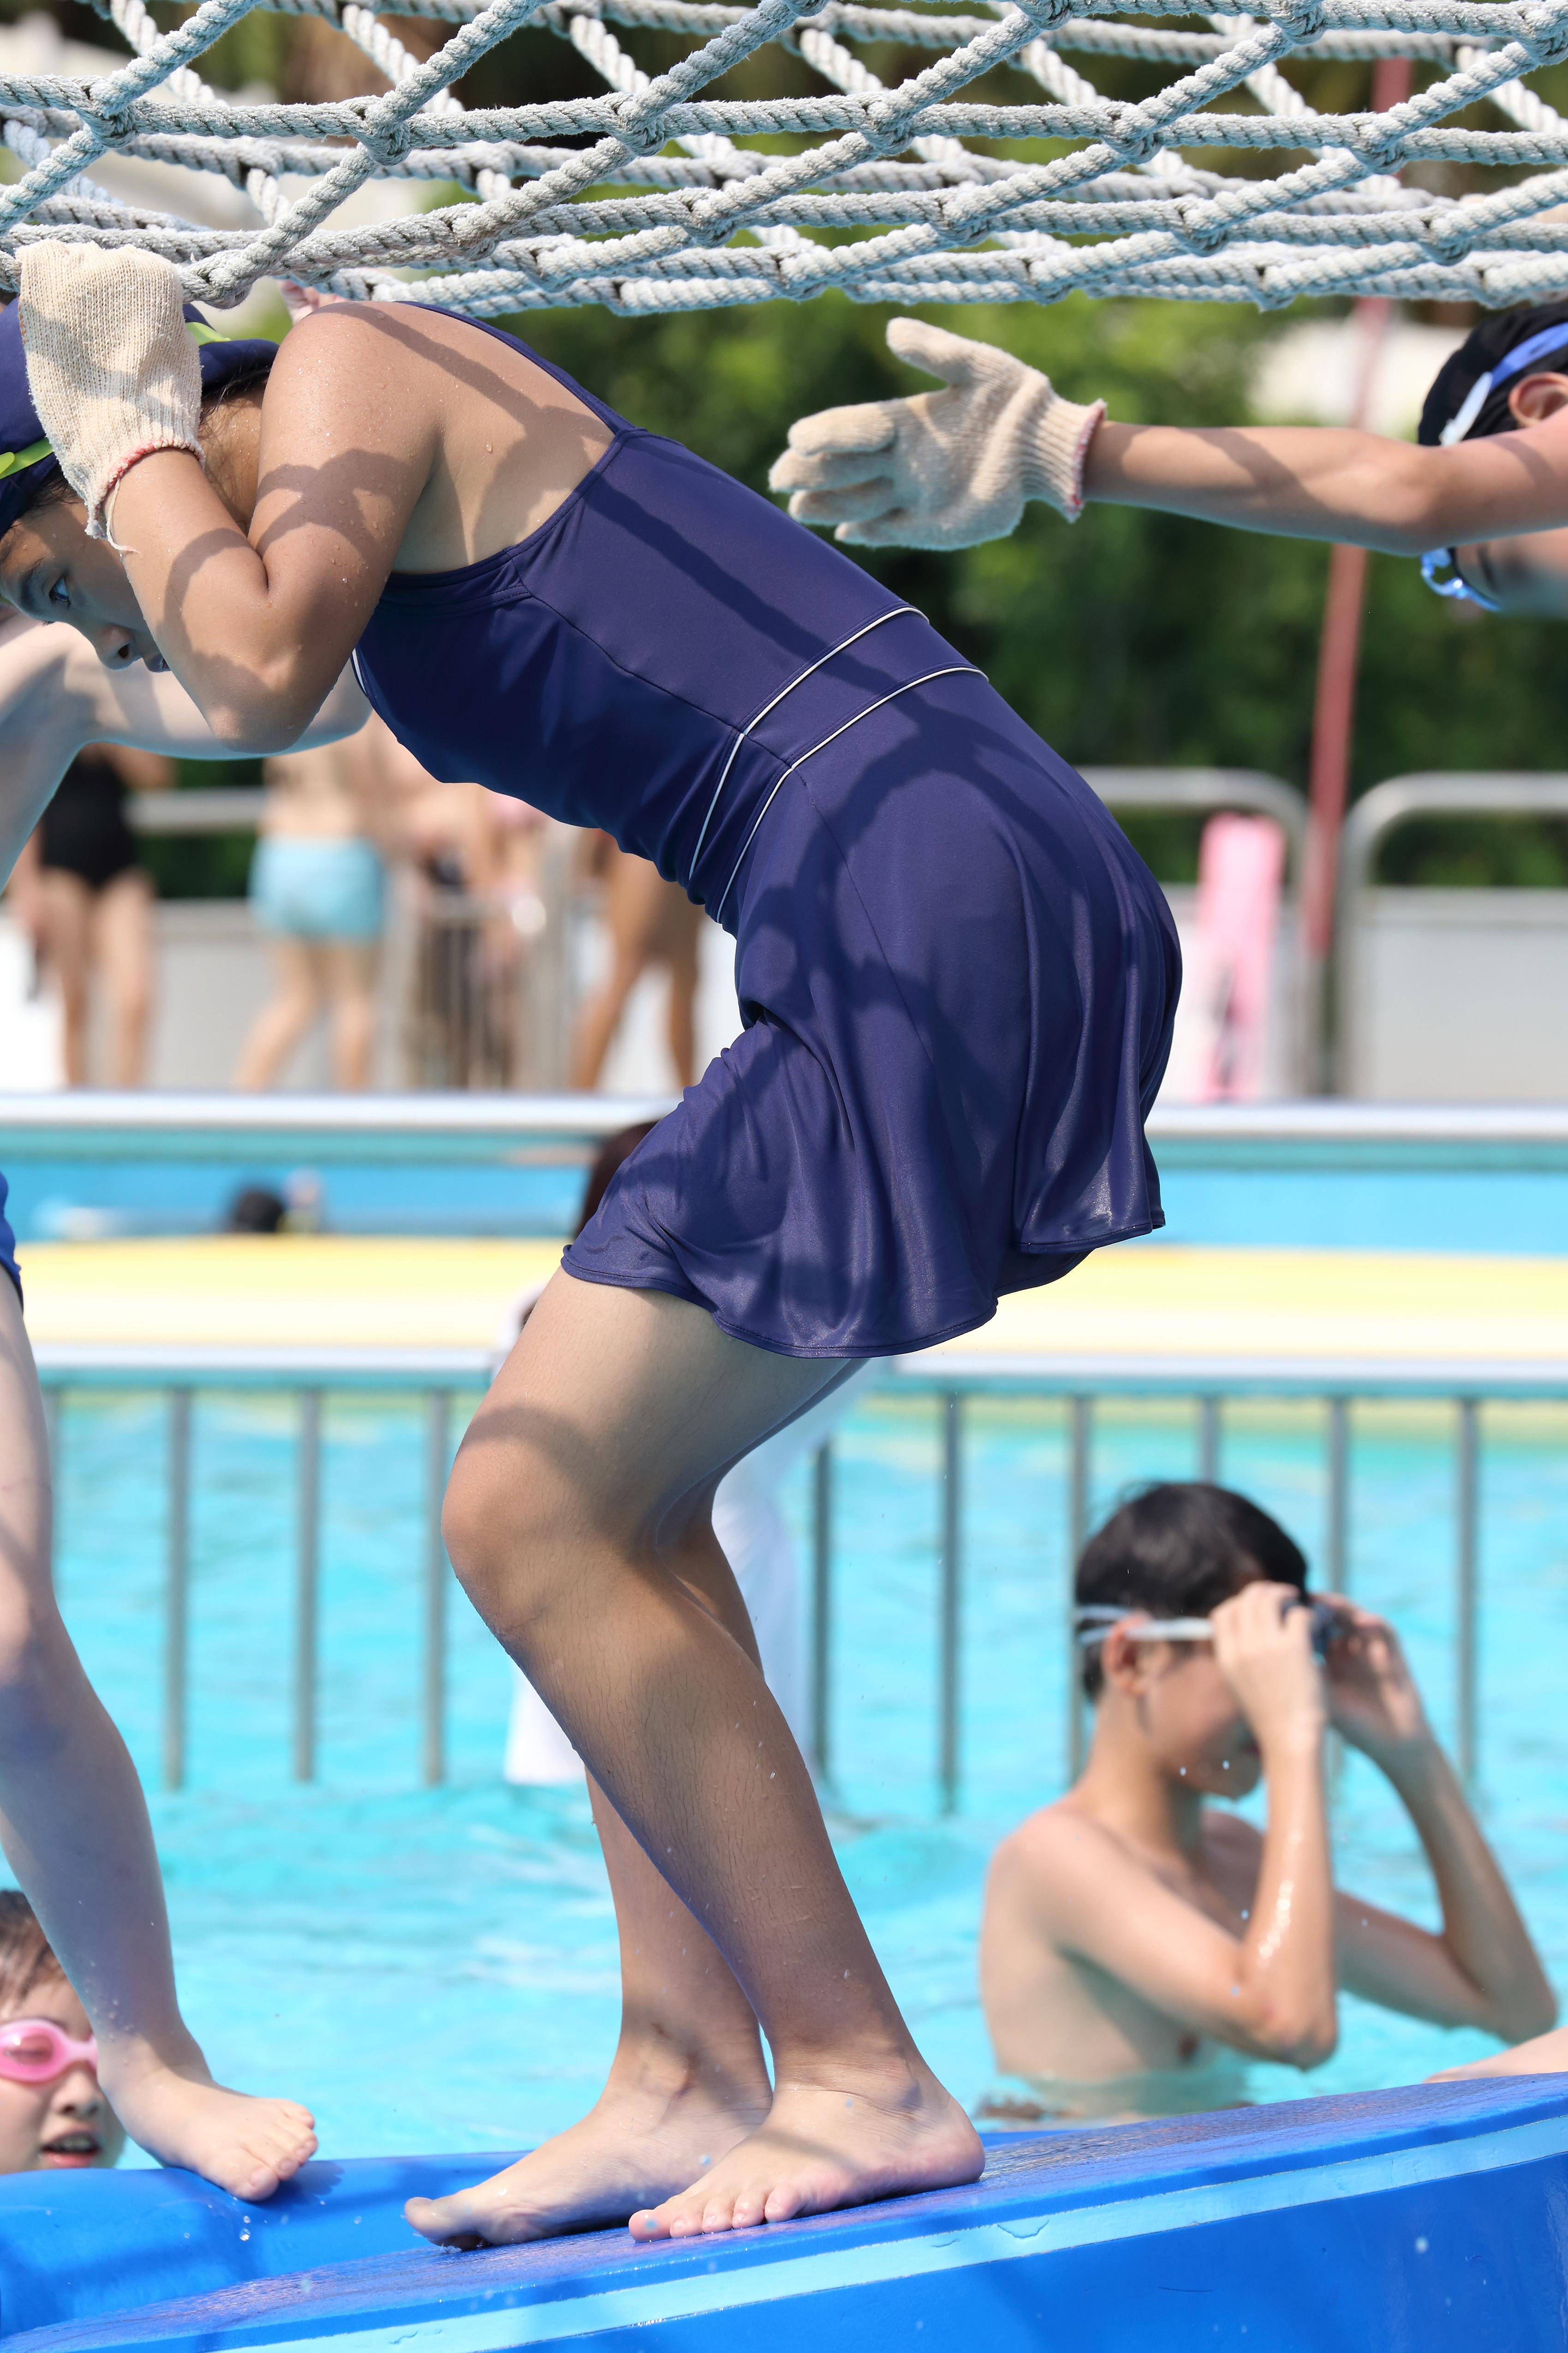 SWIM_26 JK 泳装图像 ap20, [照片] 紧贴纤细双腿和迷人臀部的高腿泳装 vol.1 232 高质量图像！